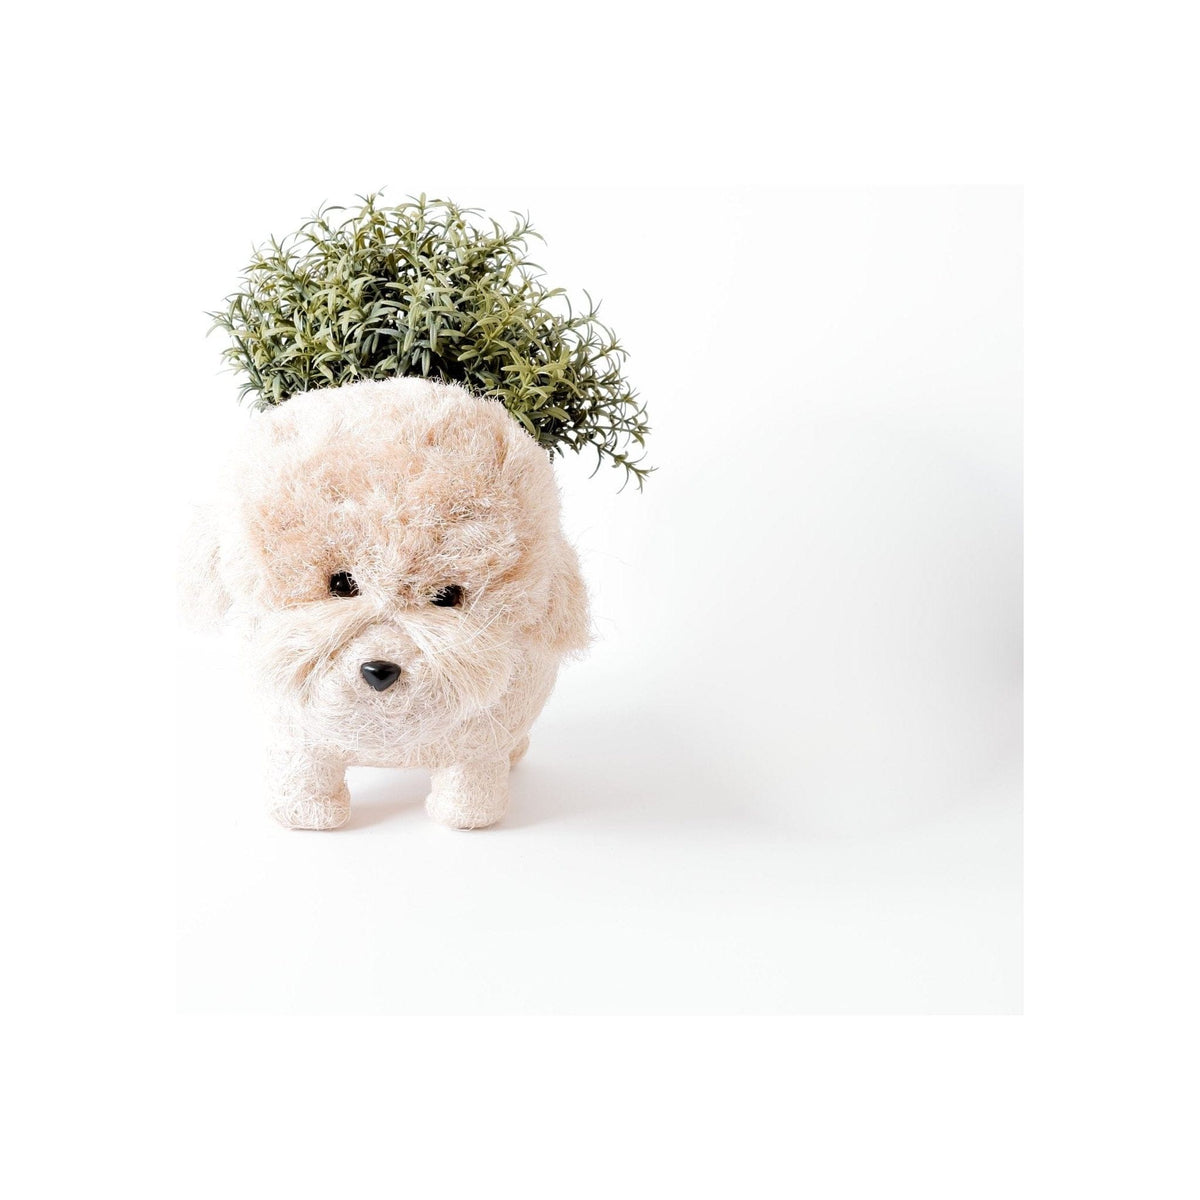 LIKHÂ Poodle Planter - Coco Coir Pots | LIKHÂ by LIKHÂ